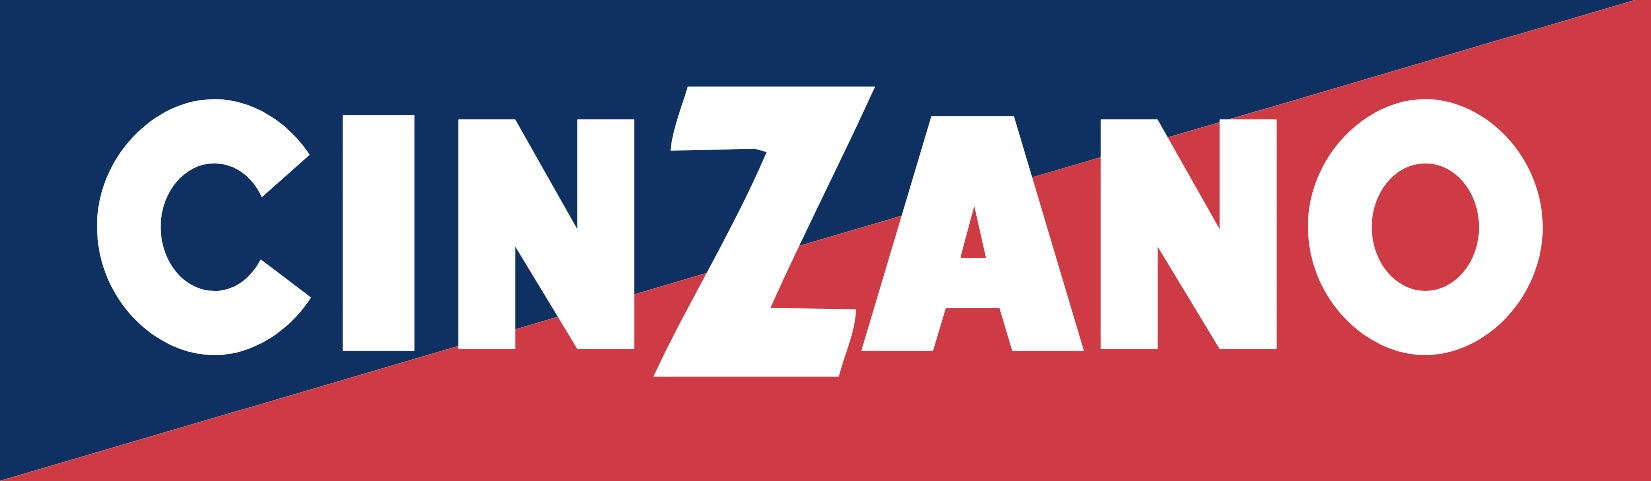 Файл:Cinzano logo 1.jpg